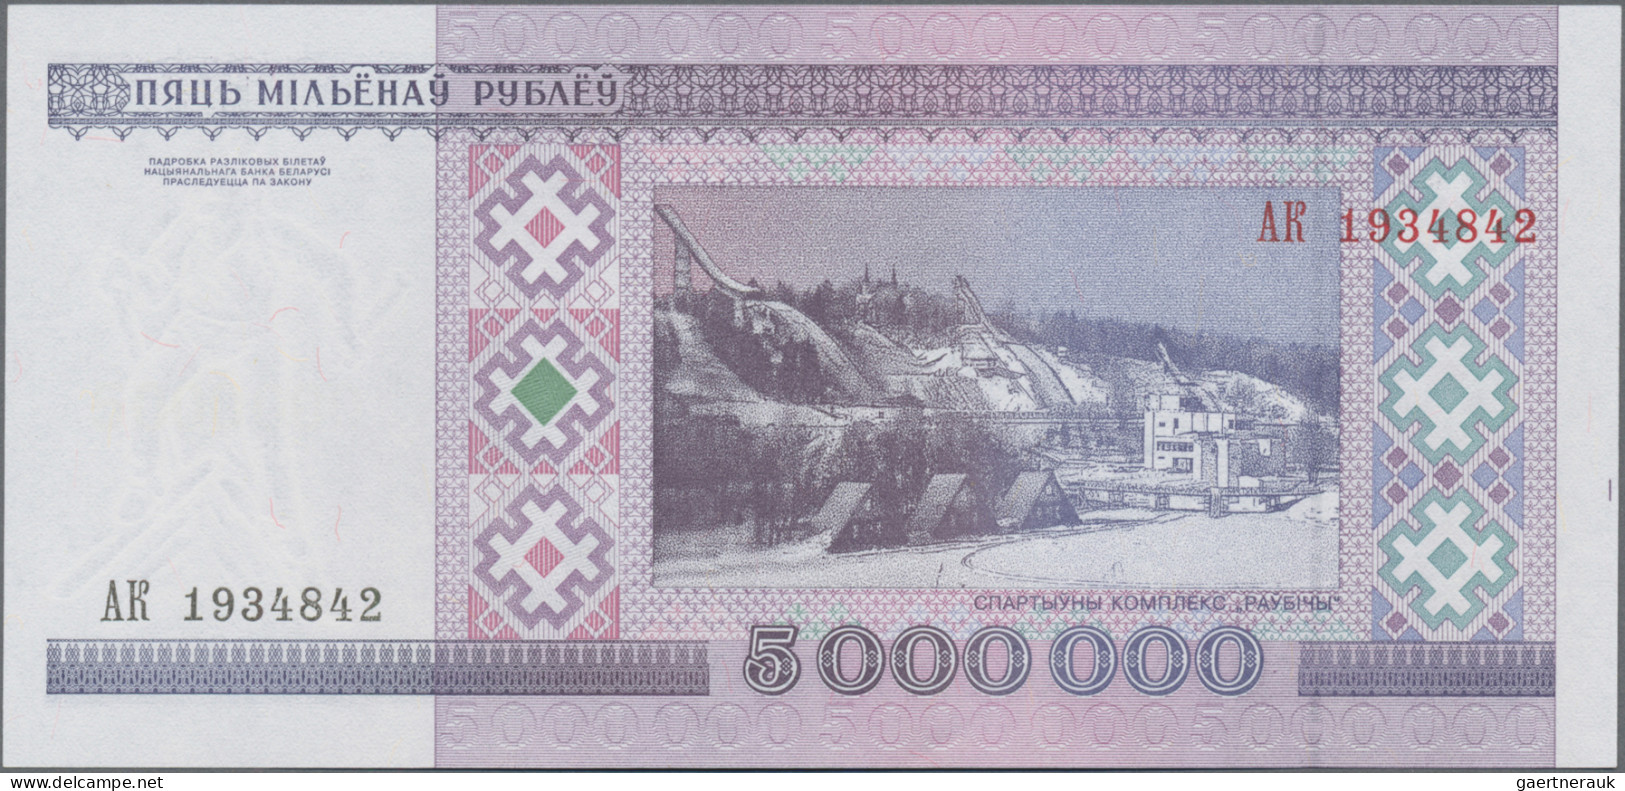 Belarus: National Bank Of Belarus, 5 Million Rubles 1999, P.20 In Perfect UNC Co - Bielorussia